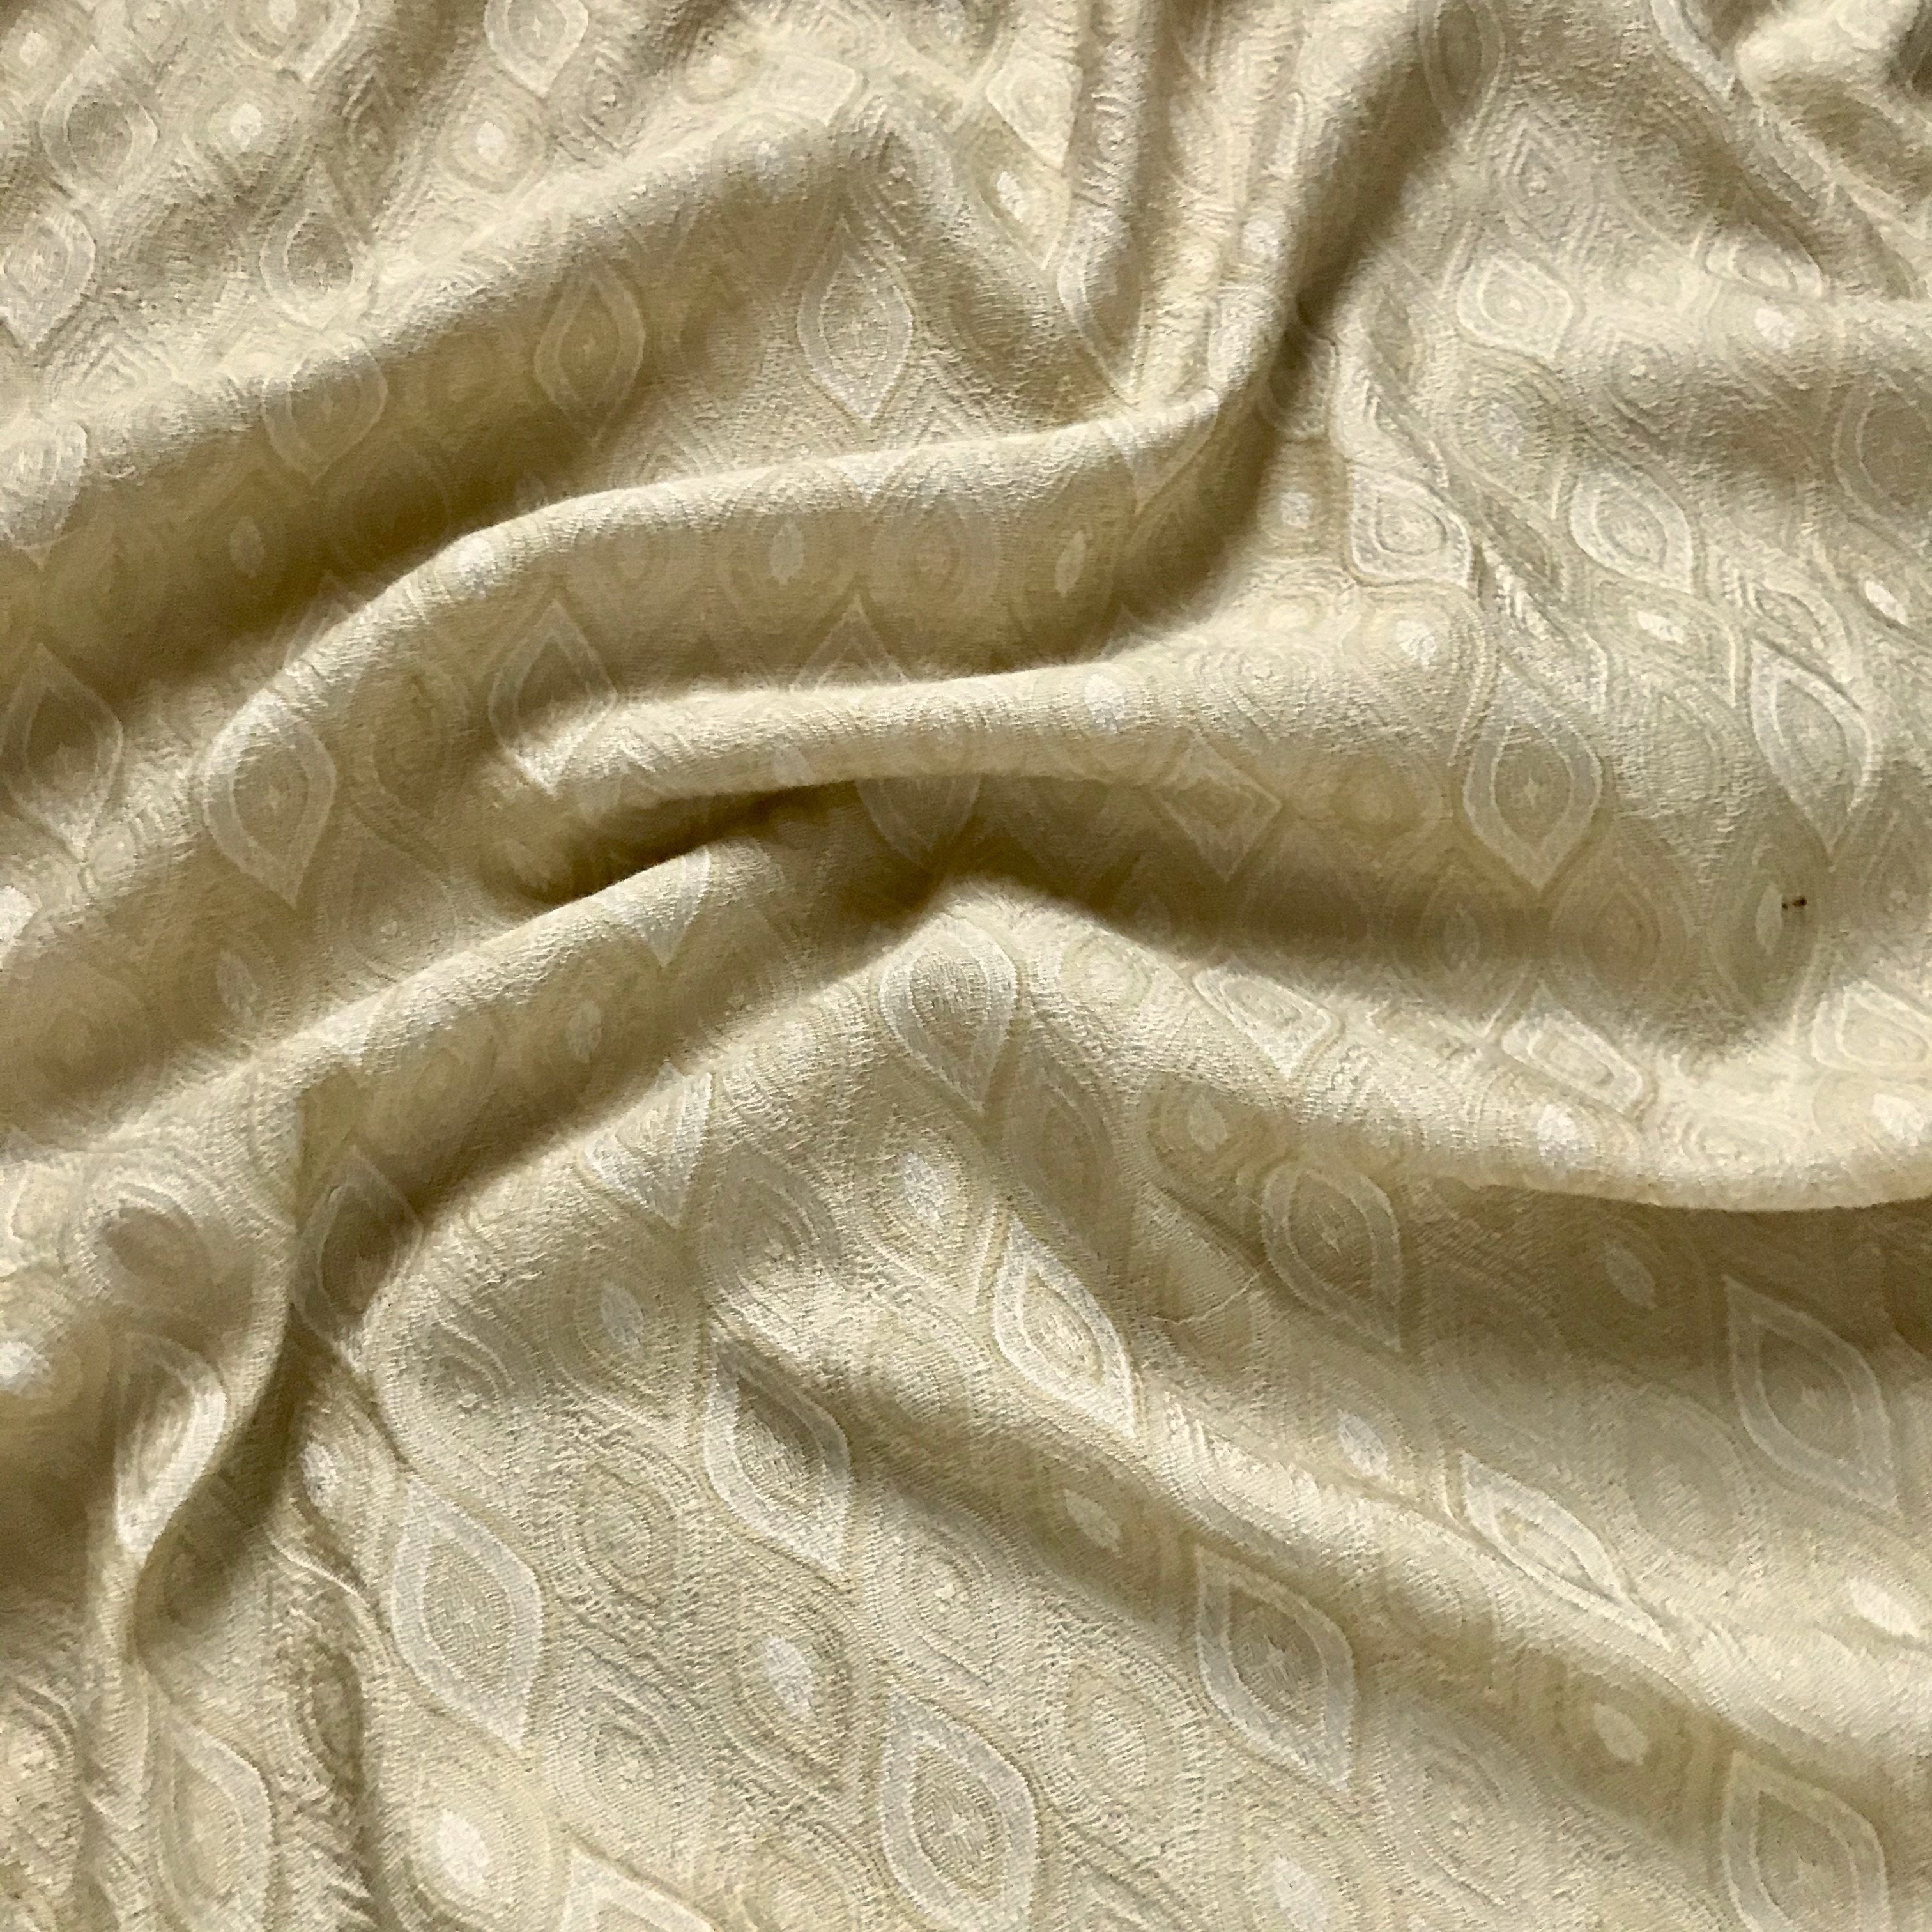 African-Made Kente #1 Fabric 12 Yards